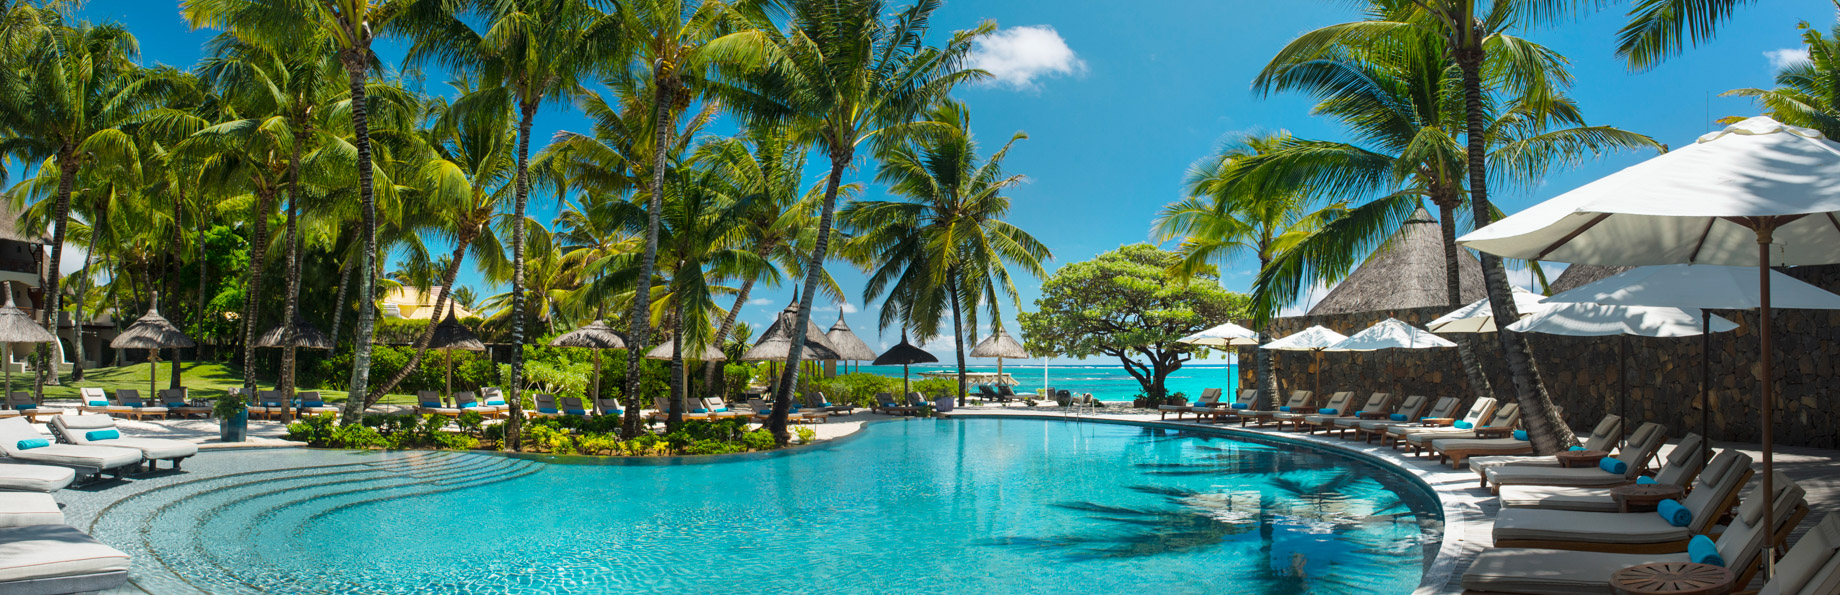 Constance Belle Mare Plage Resort - Mauritius - Resort Pool